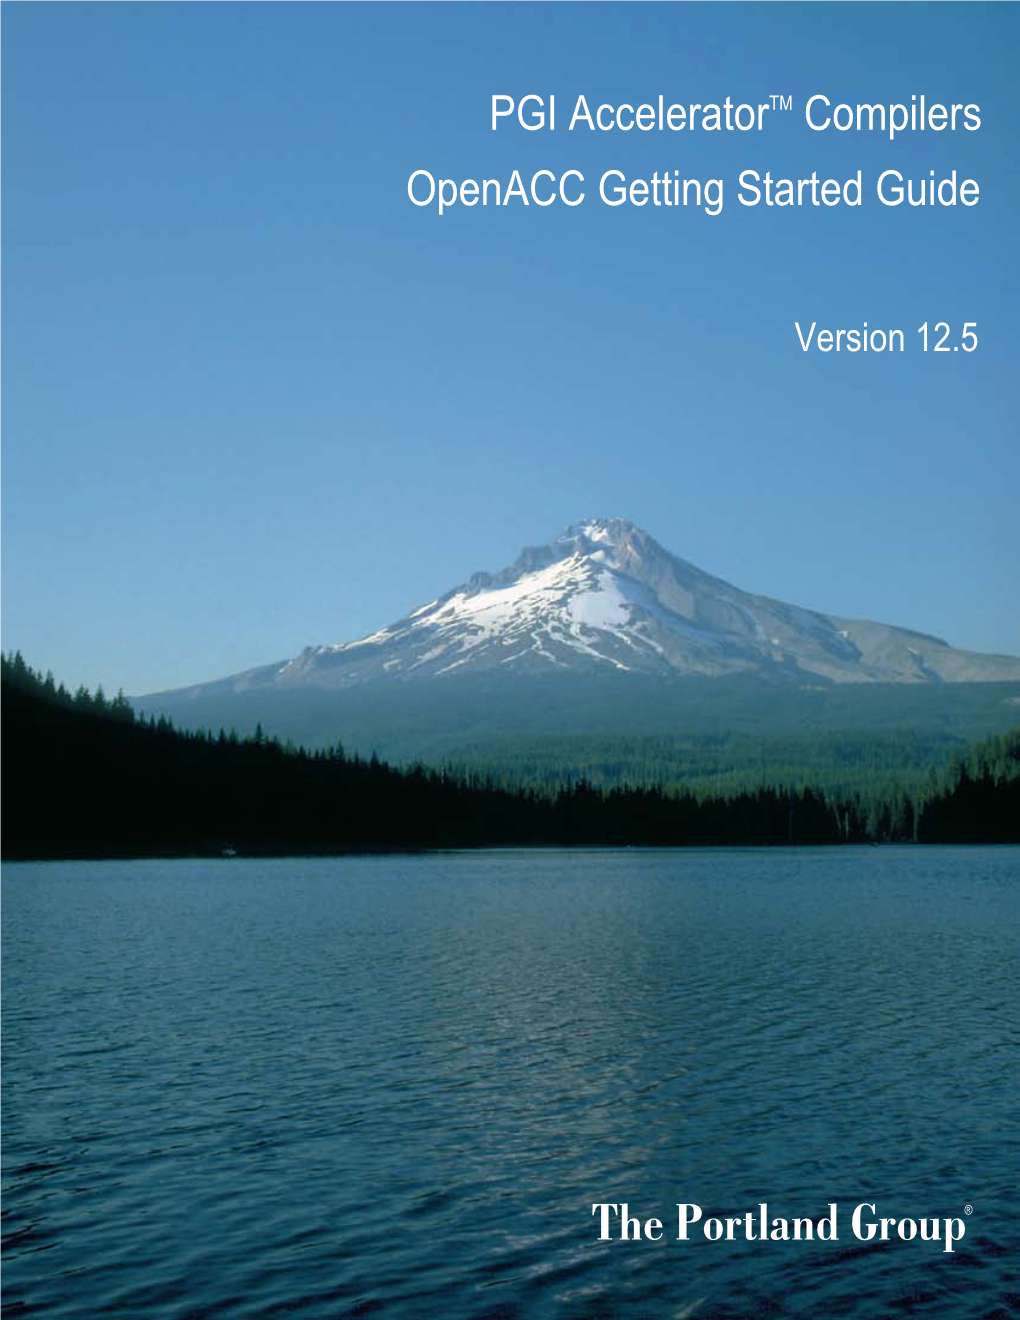 PGI Acceleratortm Compilers Openacc Getting Started Guide